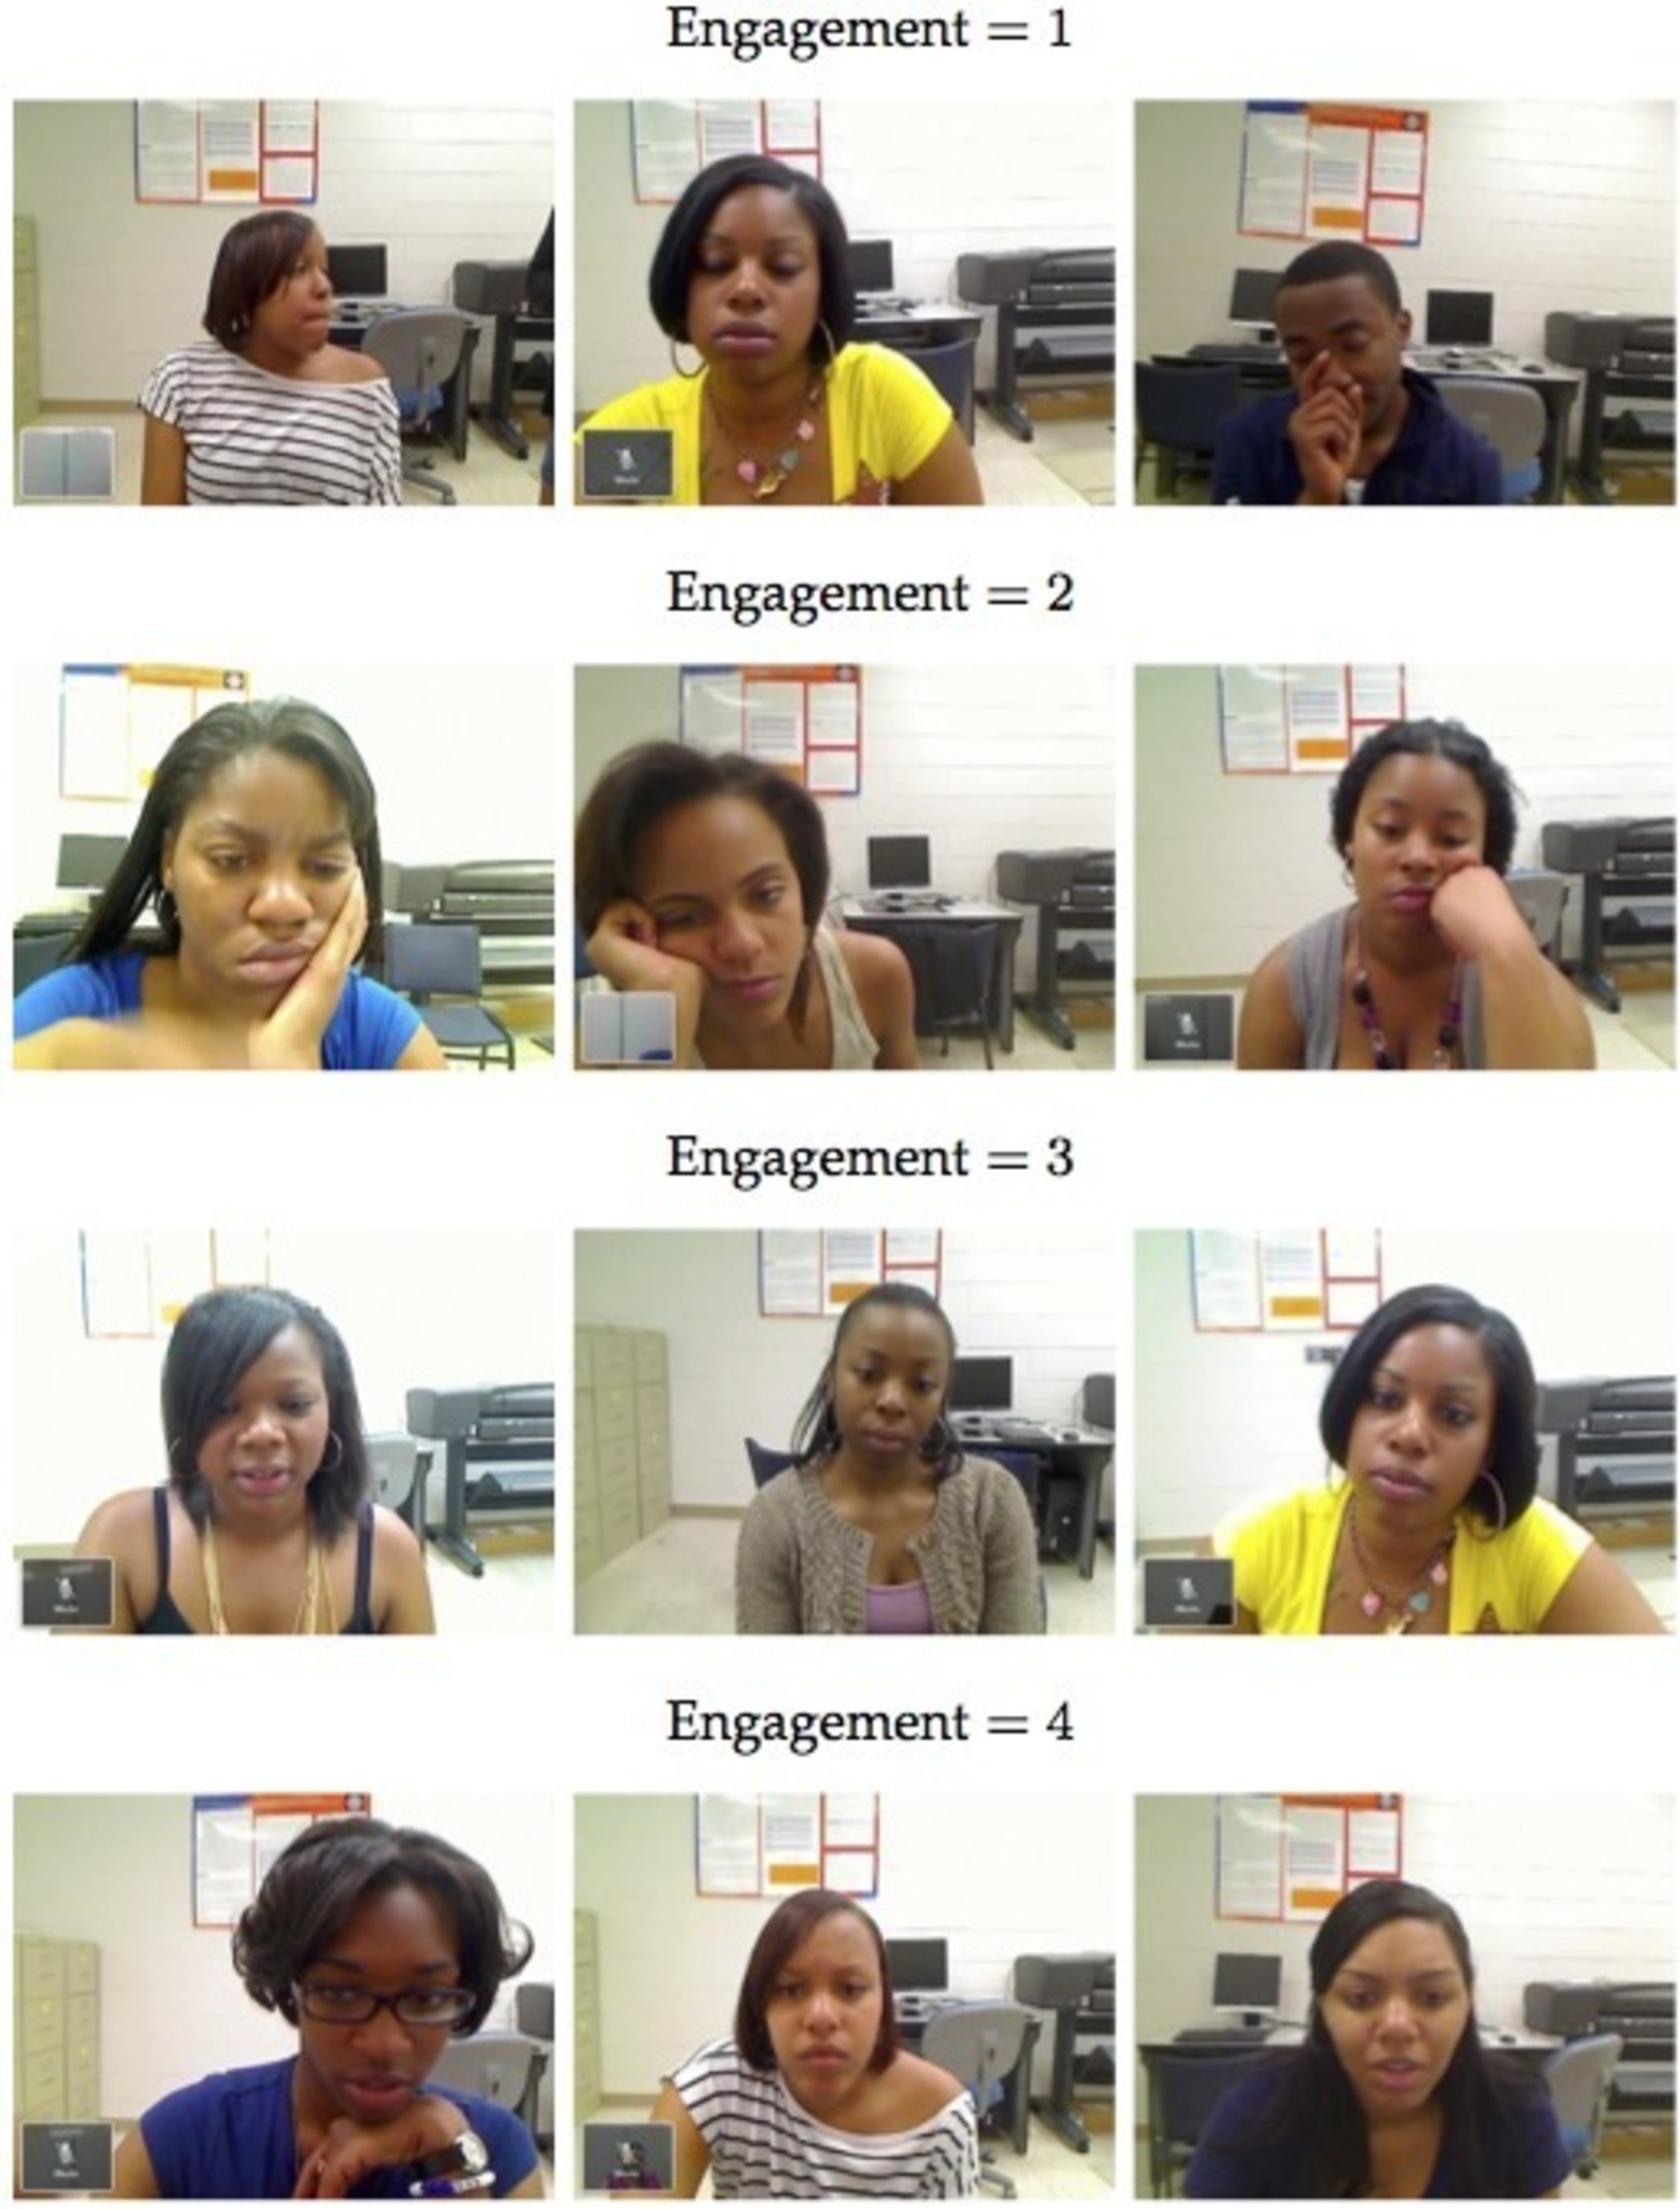 The Faces of Engagement: Automatic Recognition of Student Engagement. (PRNewsFoto/Emotient)